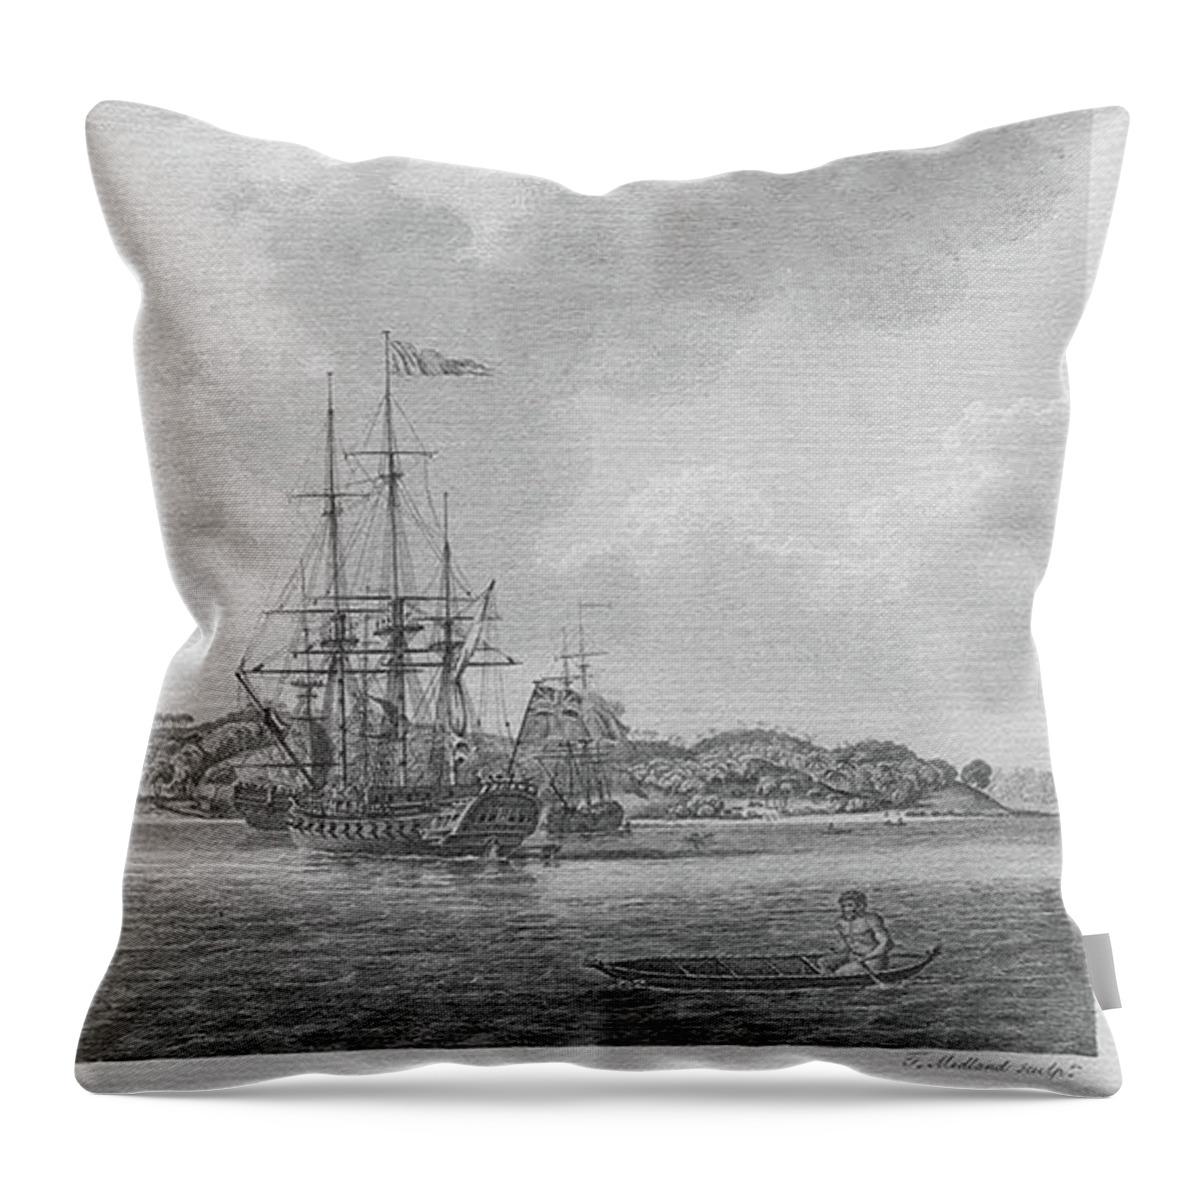 Botany Bay Throw Pillow featuring the photograph Bare Island And First Fleet by Miroslava Jurcik